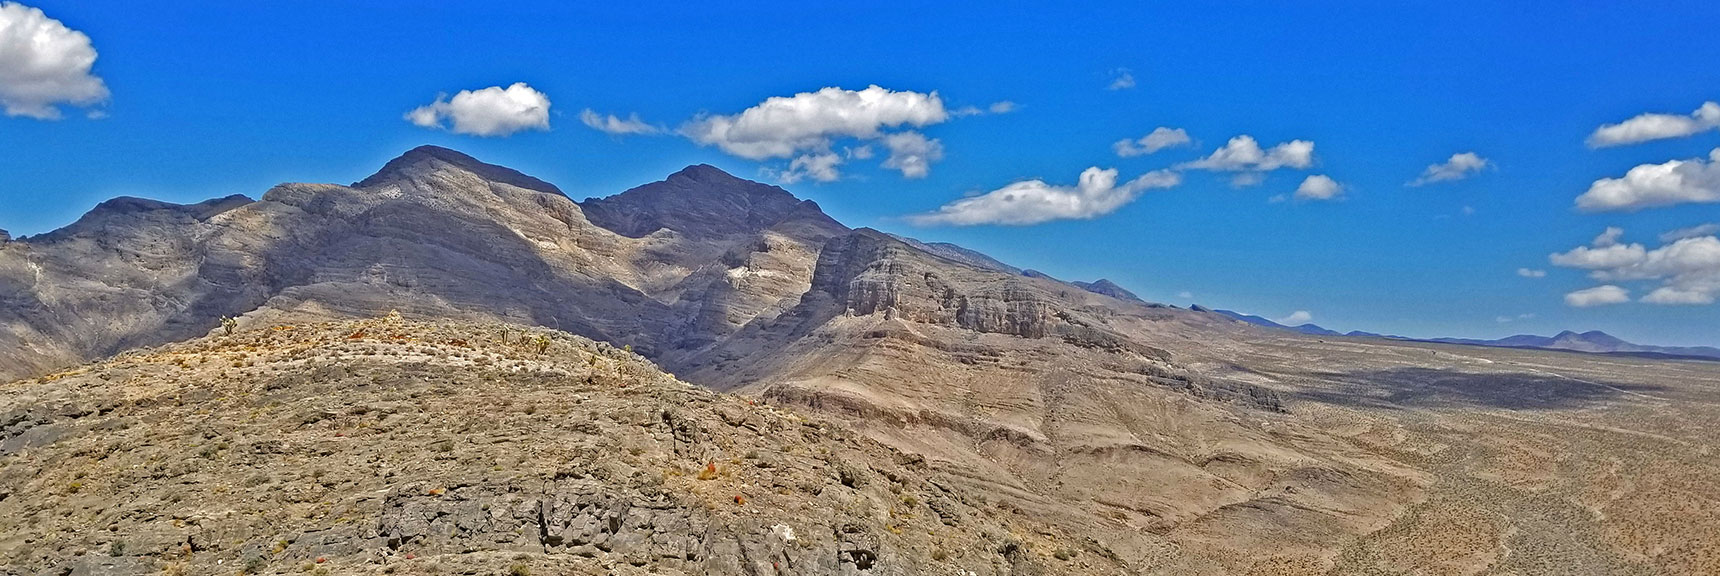 Southern Sheep Range from Fossil Ridge Summit | Fossil Ridge End to End | Sheep Range | Desert National Wildlife Refuge, Nevada